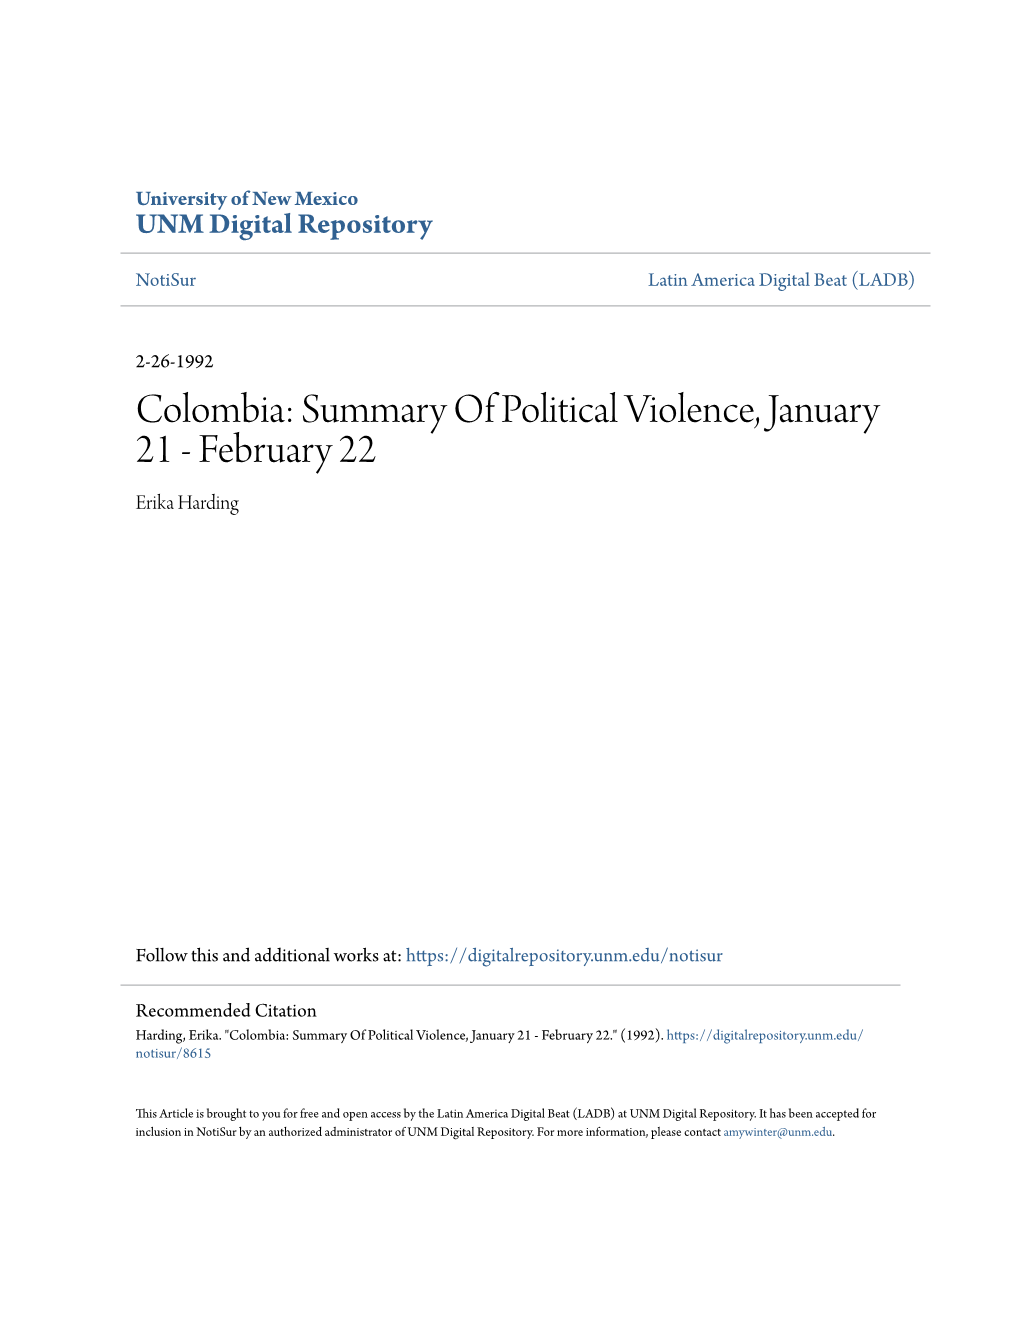 Colombia: Summary of Political Violence, January 21 - February 22 Erika Harding